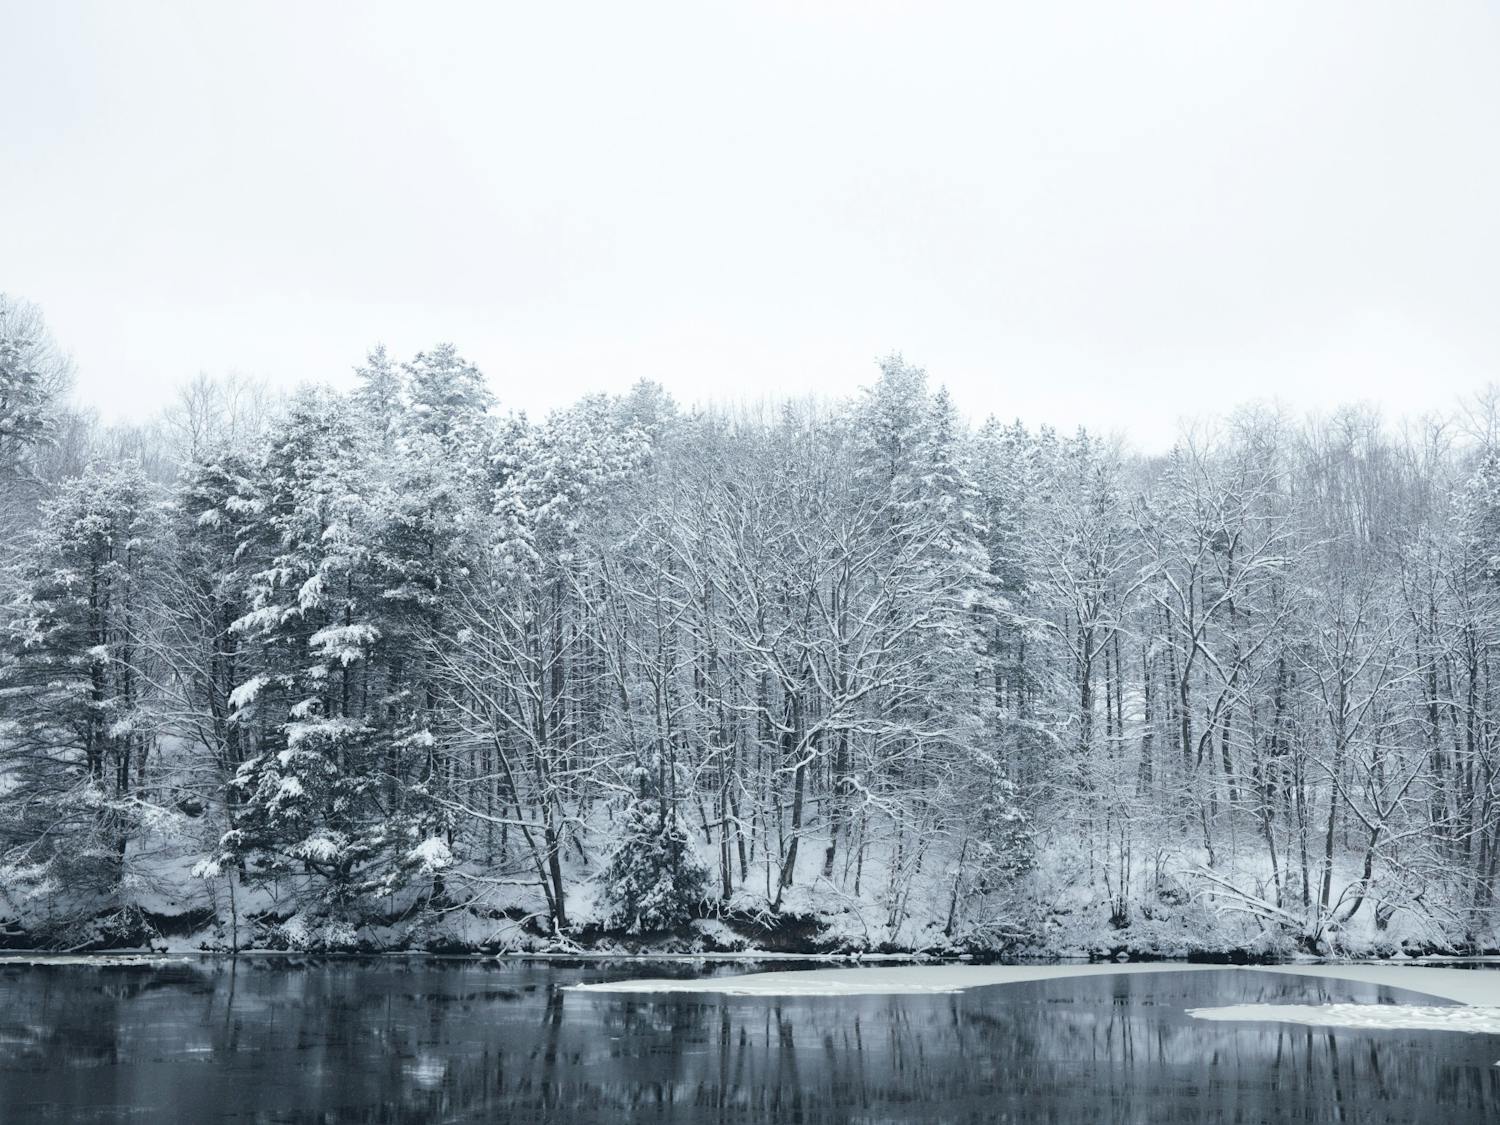 Photo Essay: Winter in Hanover